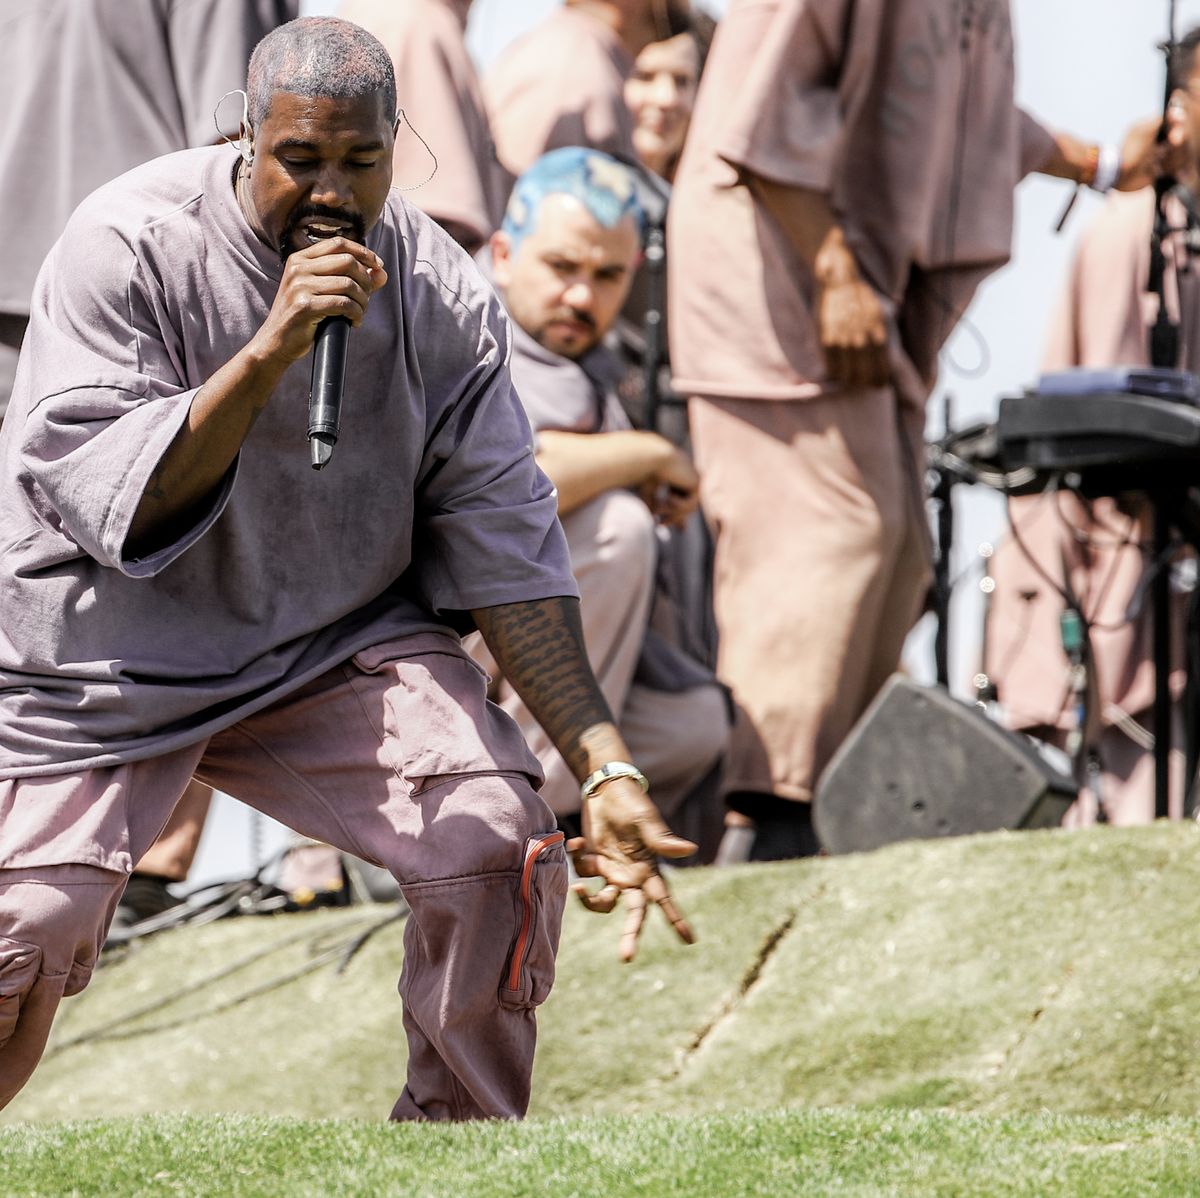 Go Behind the Scenes of Kanye West's Jesus Is King Film